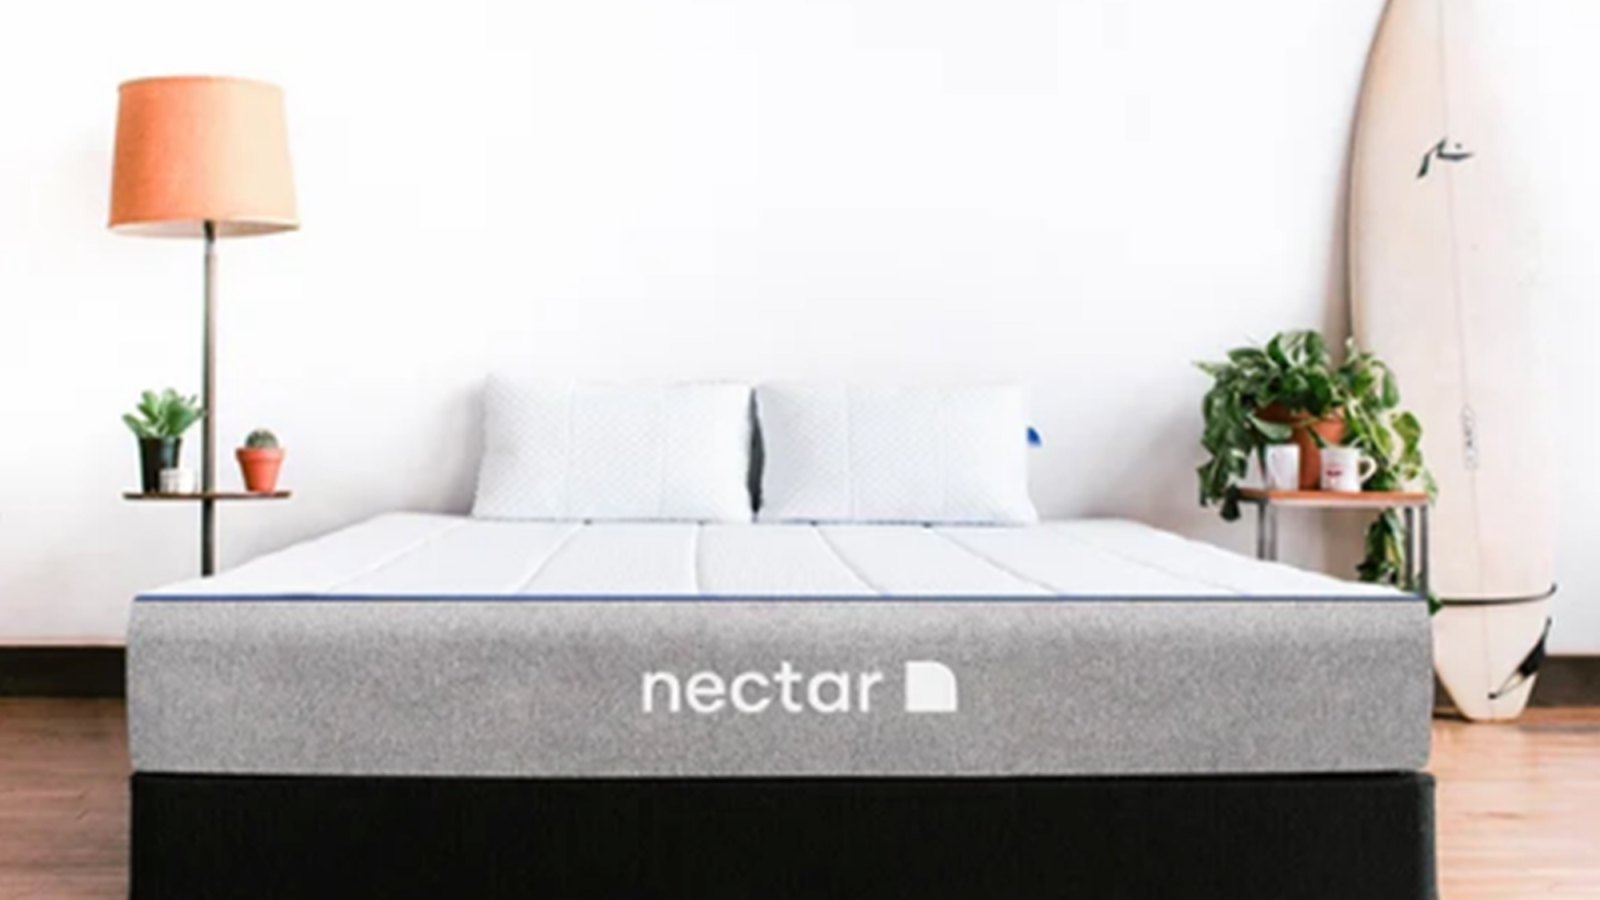 Nectar-Mattress-Pad